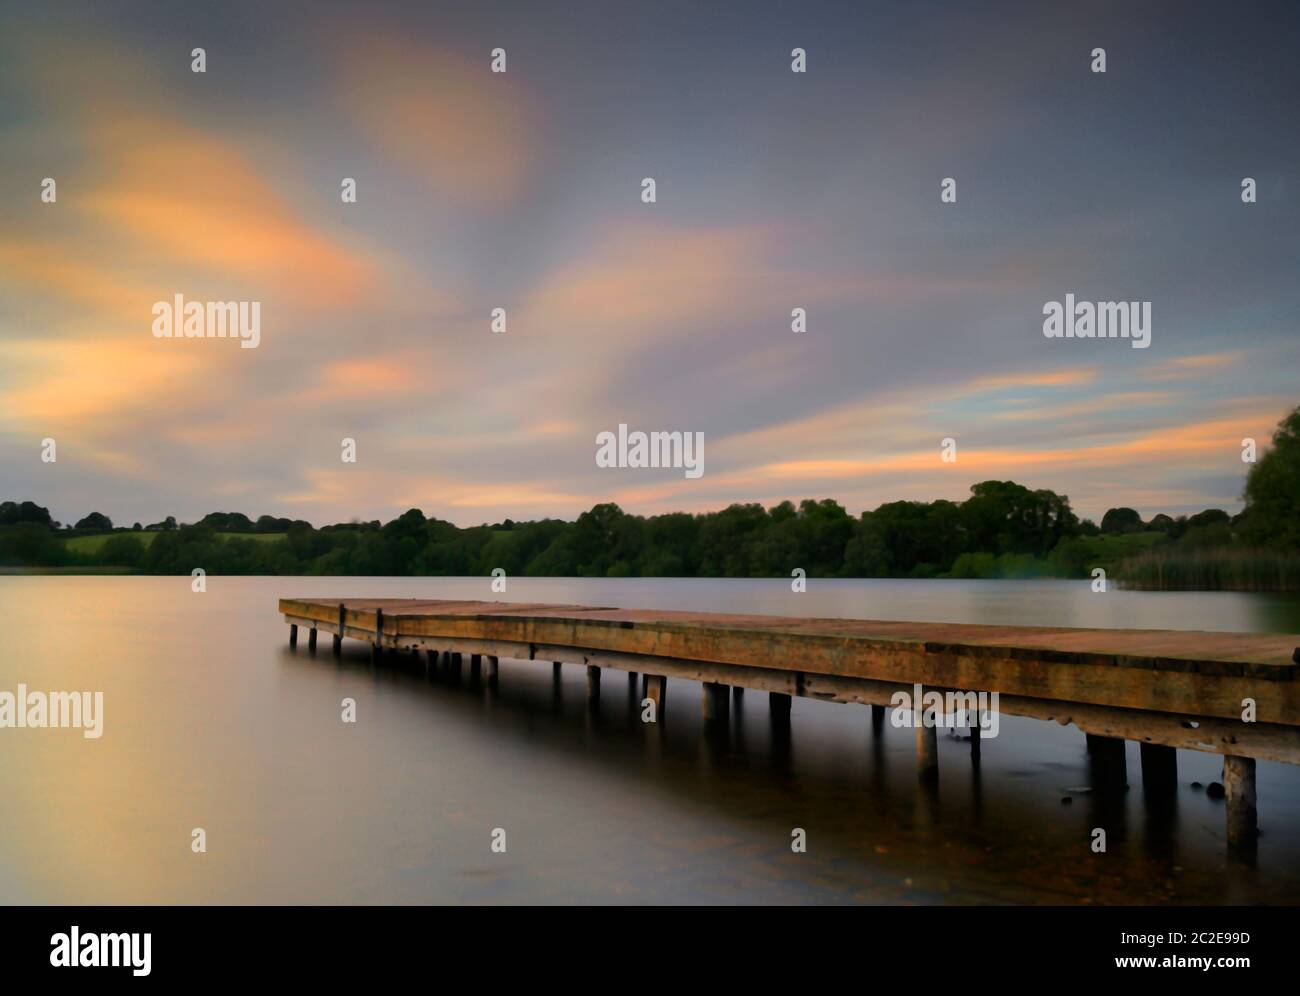 The beautiful pickmere lake Stock Photo